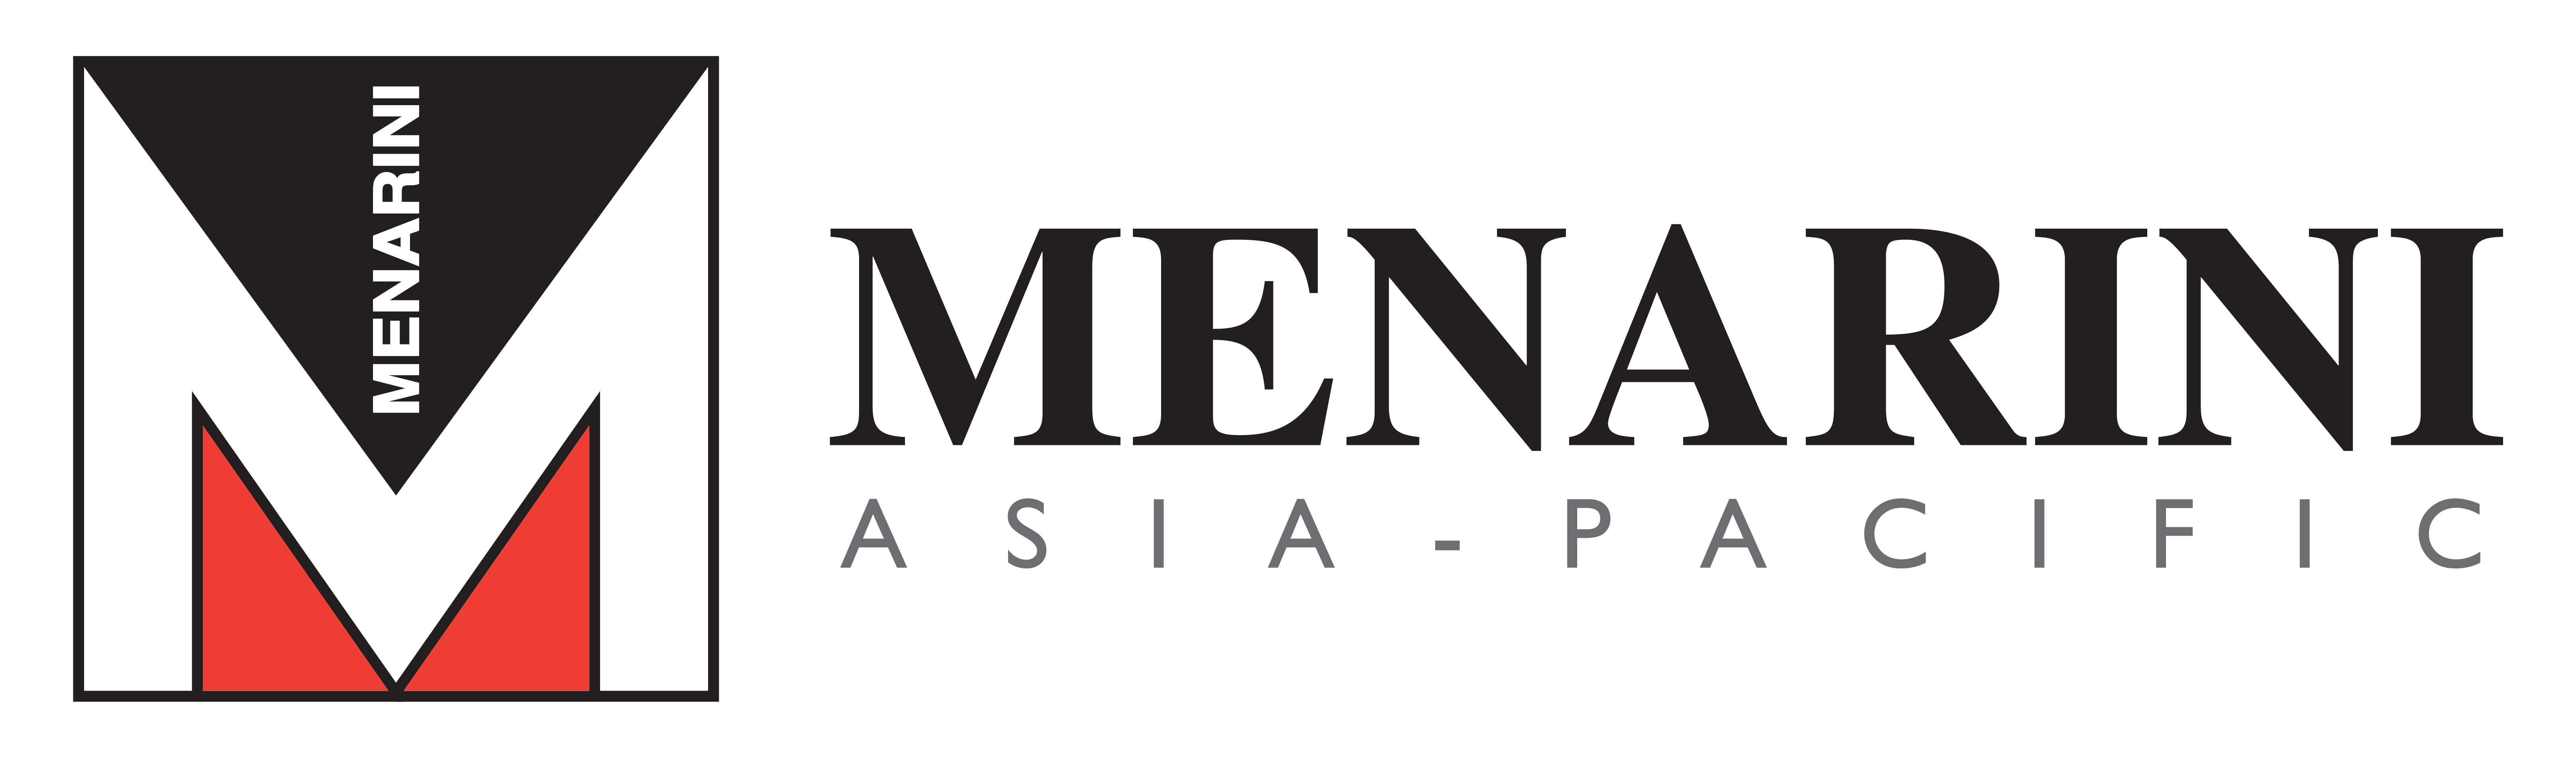 Menariniapac